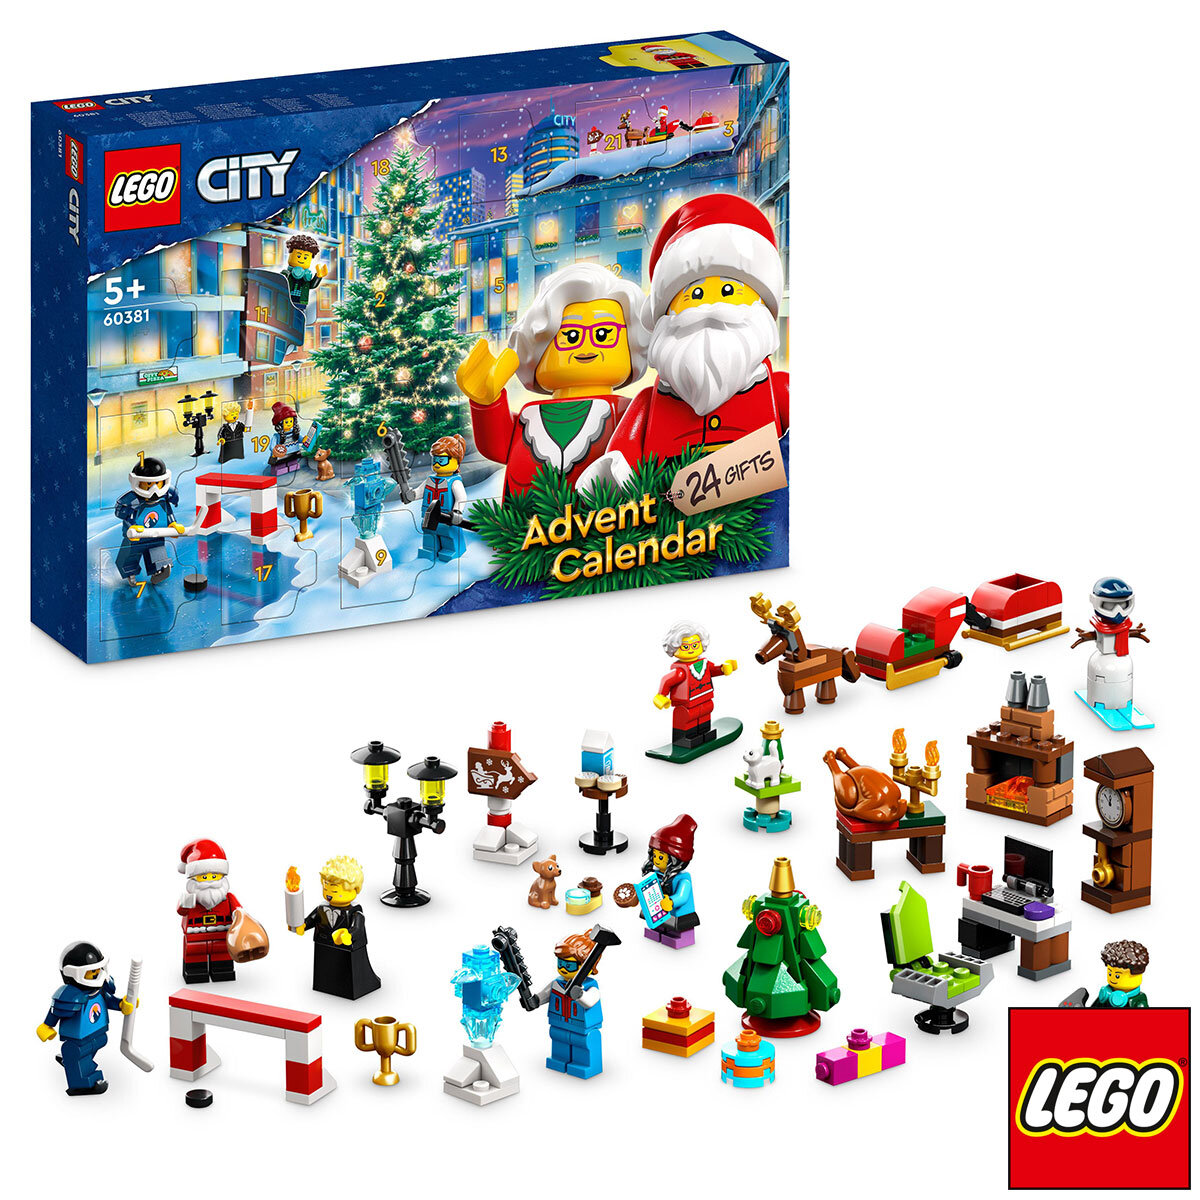 LEGO City Advent Calendar Model 60381 (5+ Years) Cost...